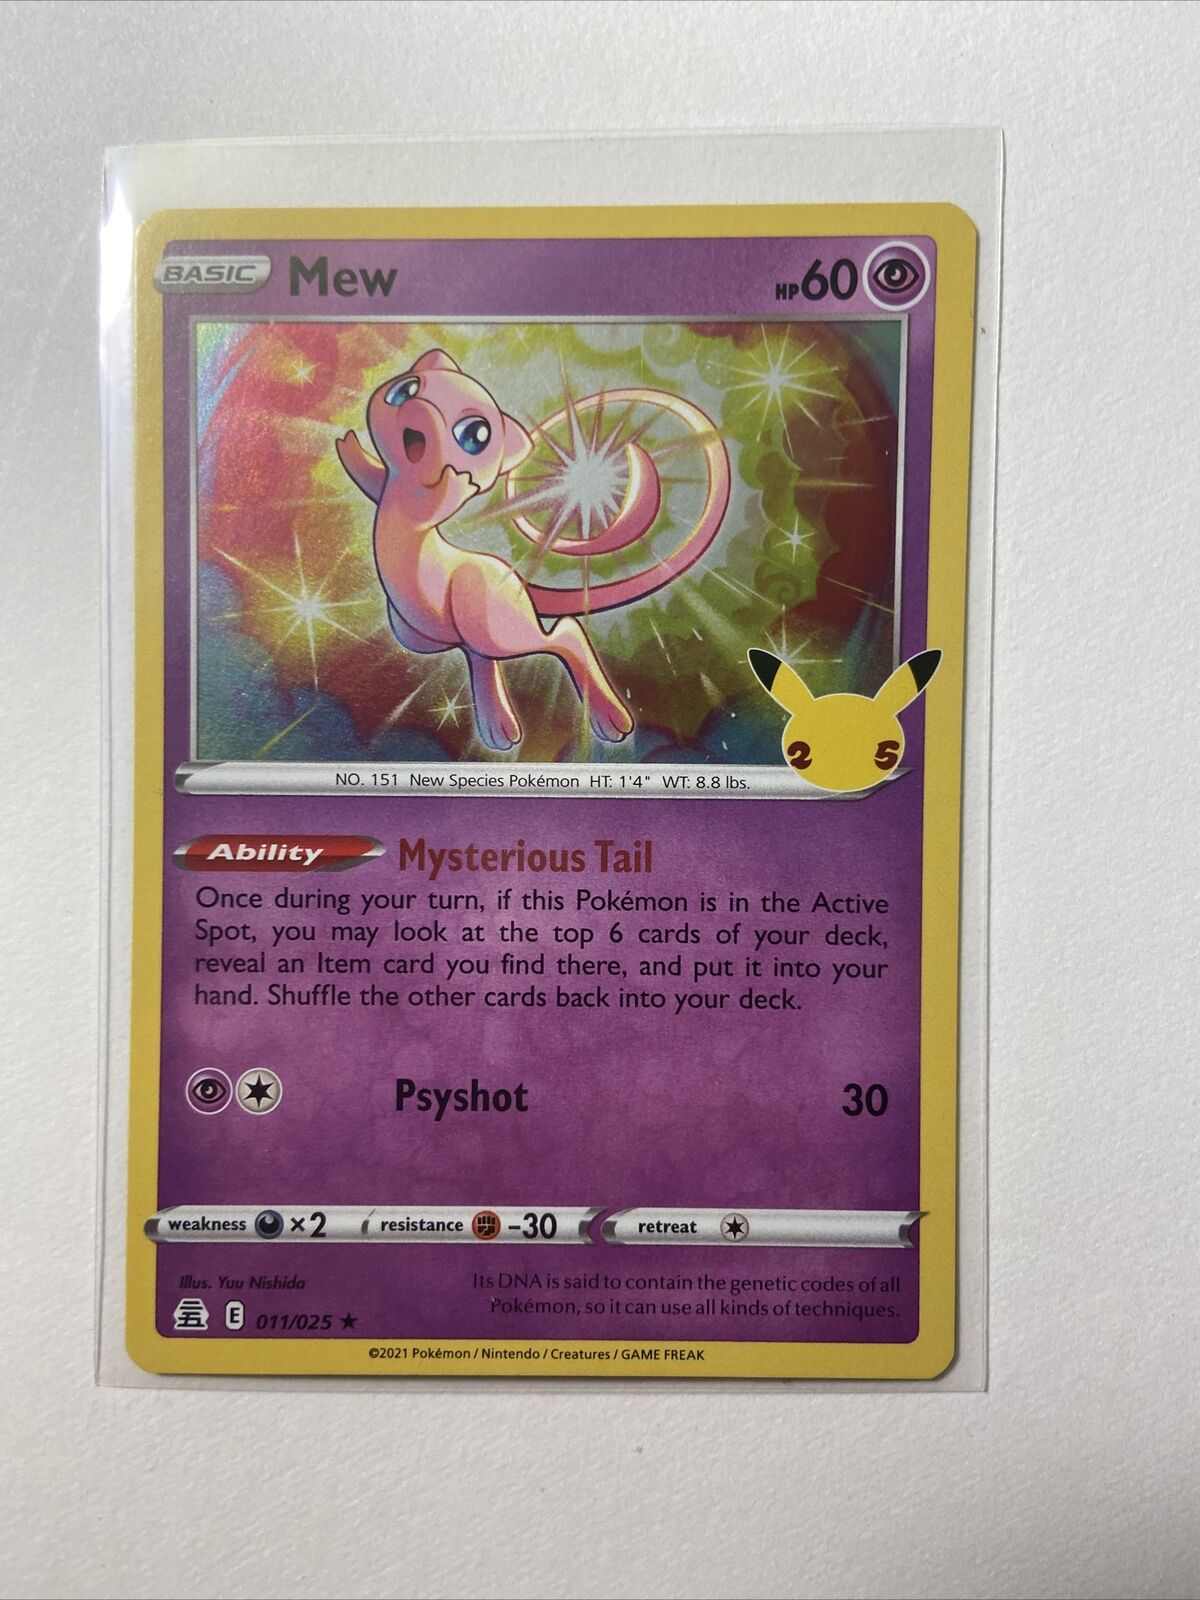 Pokémon Celebrations Mew 011/025 Holo Rare Card Near Mint/Mint